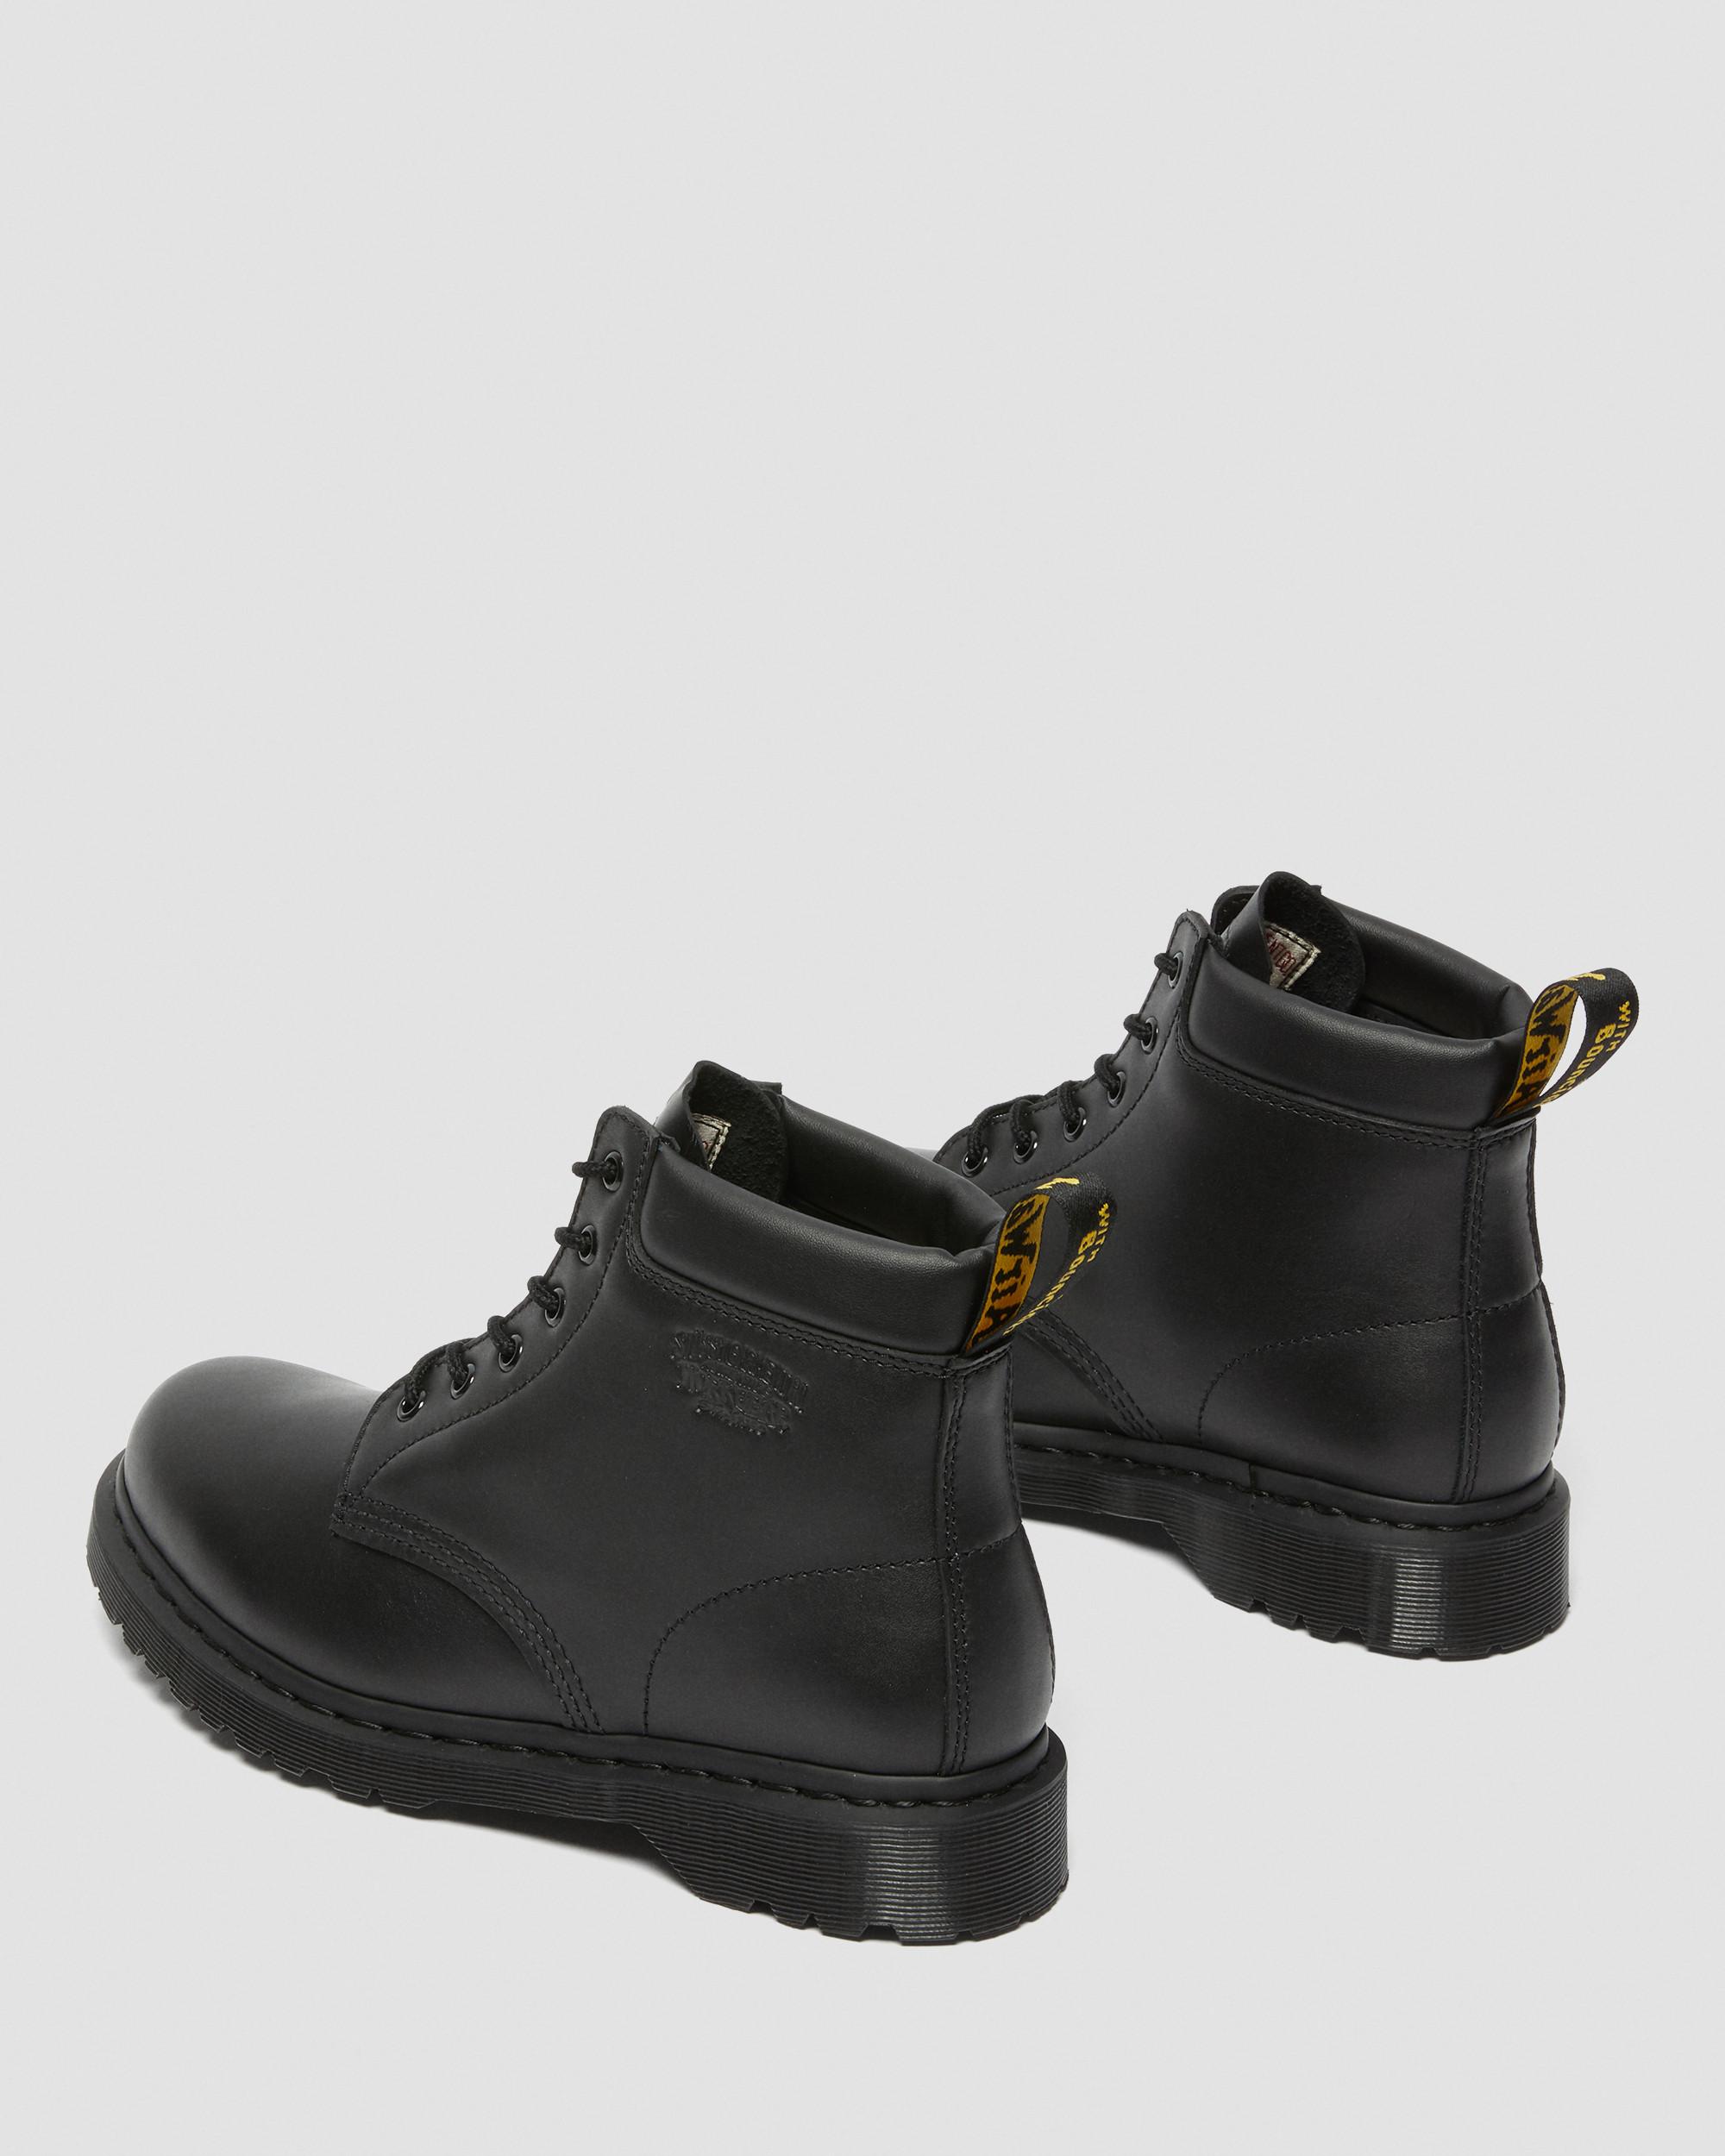 939 Stüssy Leather Ankle Boots, Black | Dr. Martens